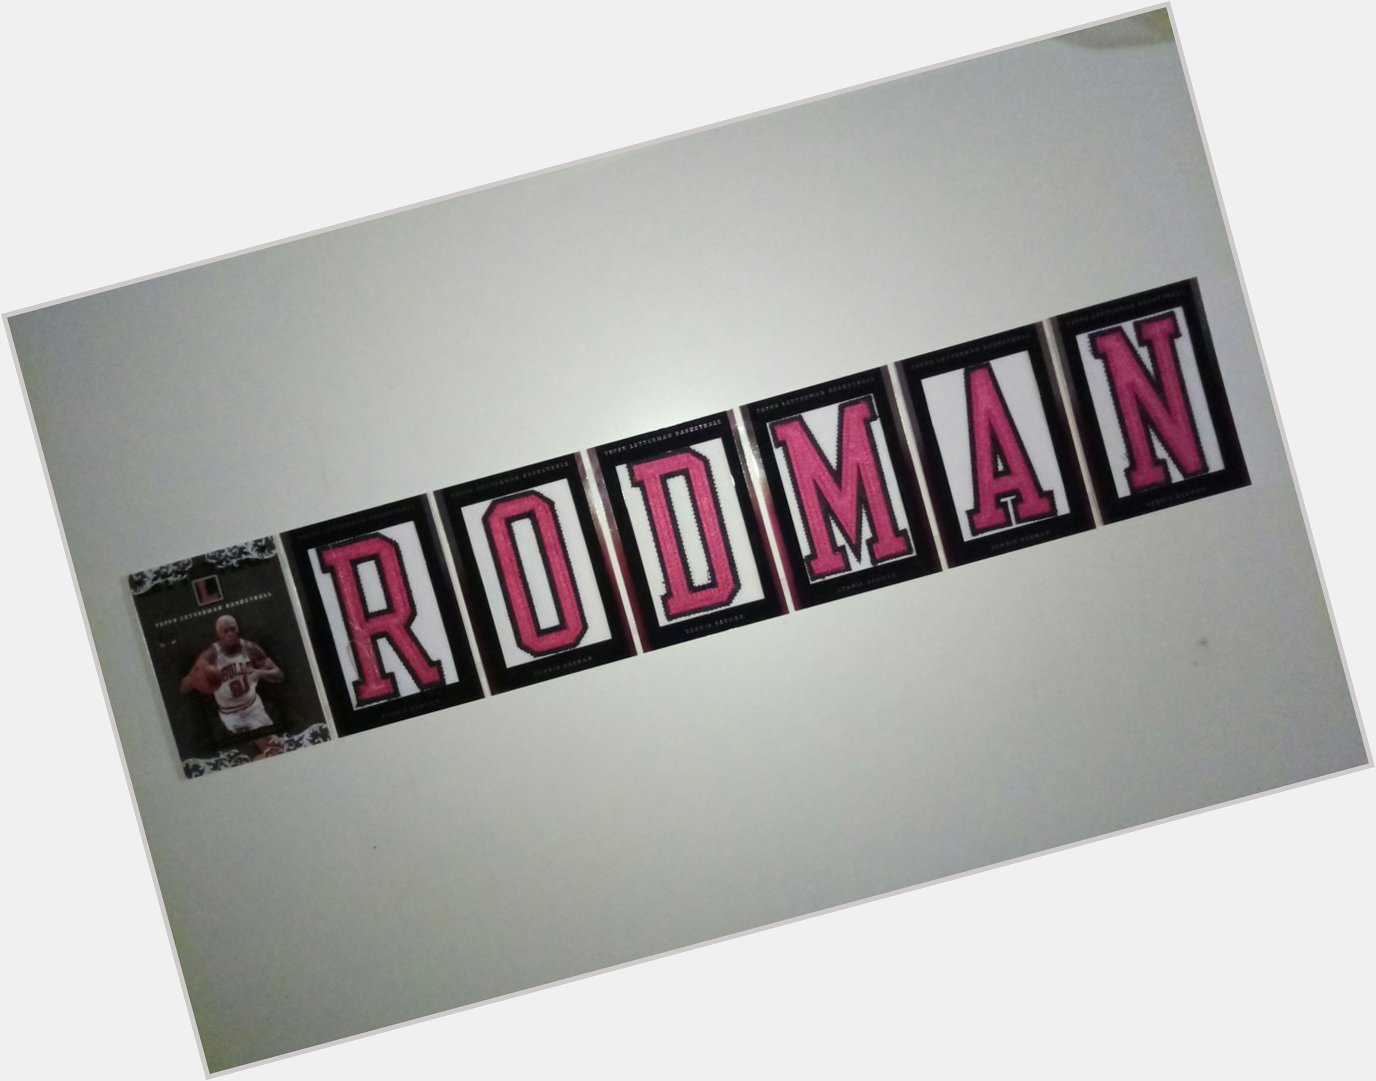 Happy Birthday Dennis Rodman! Enjoy your day !! 